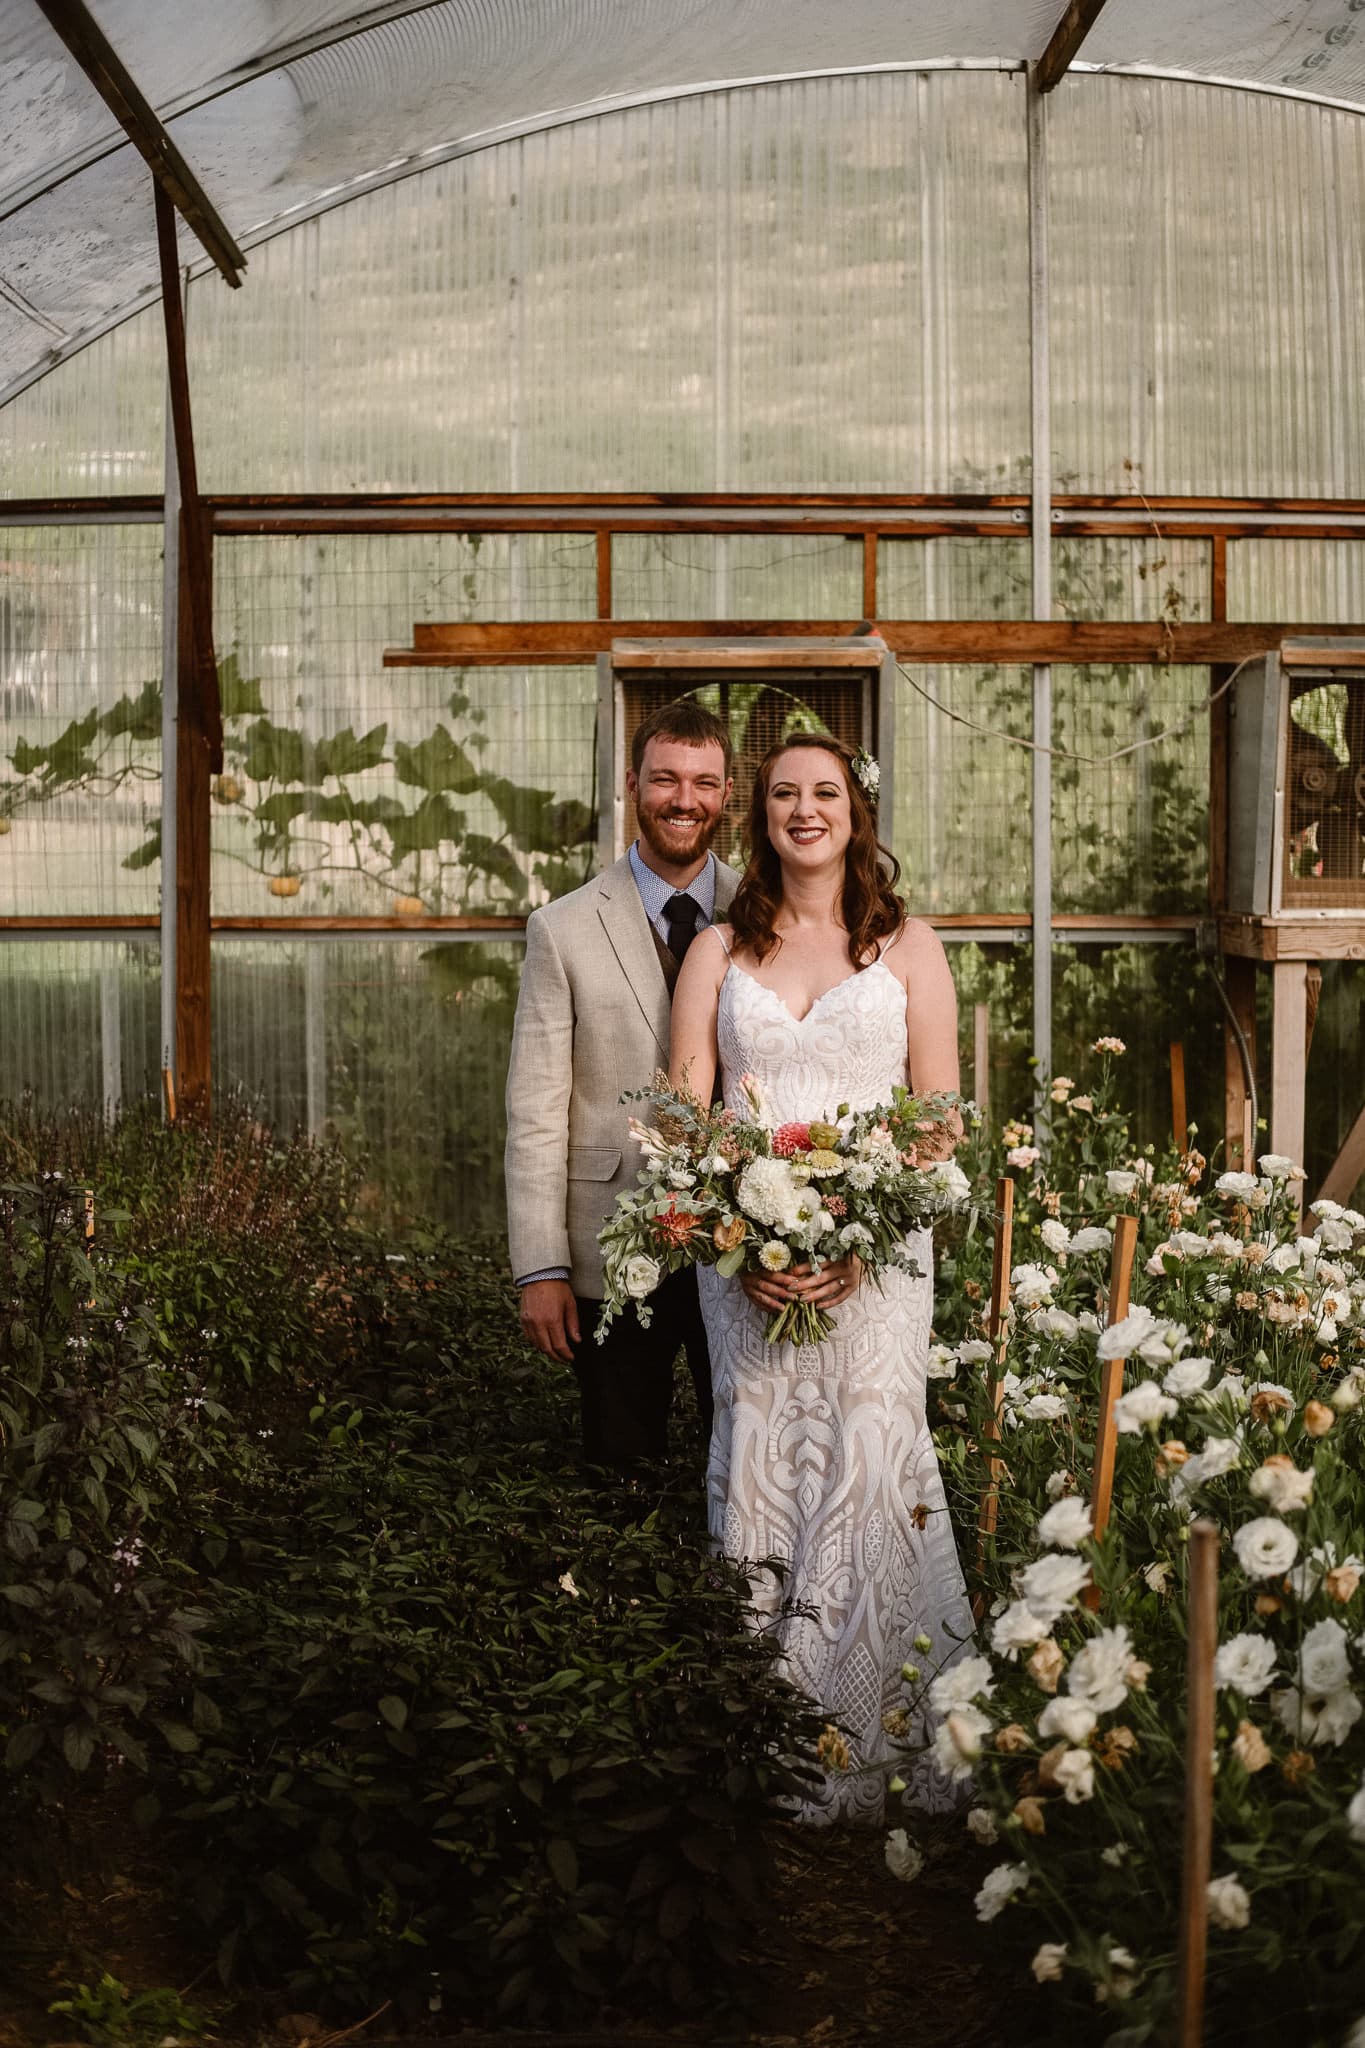 Lyons Farmette wedding photographer, Colorado intimate wedding photographer, bride and groom photos in greenhouse